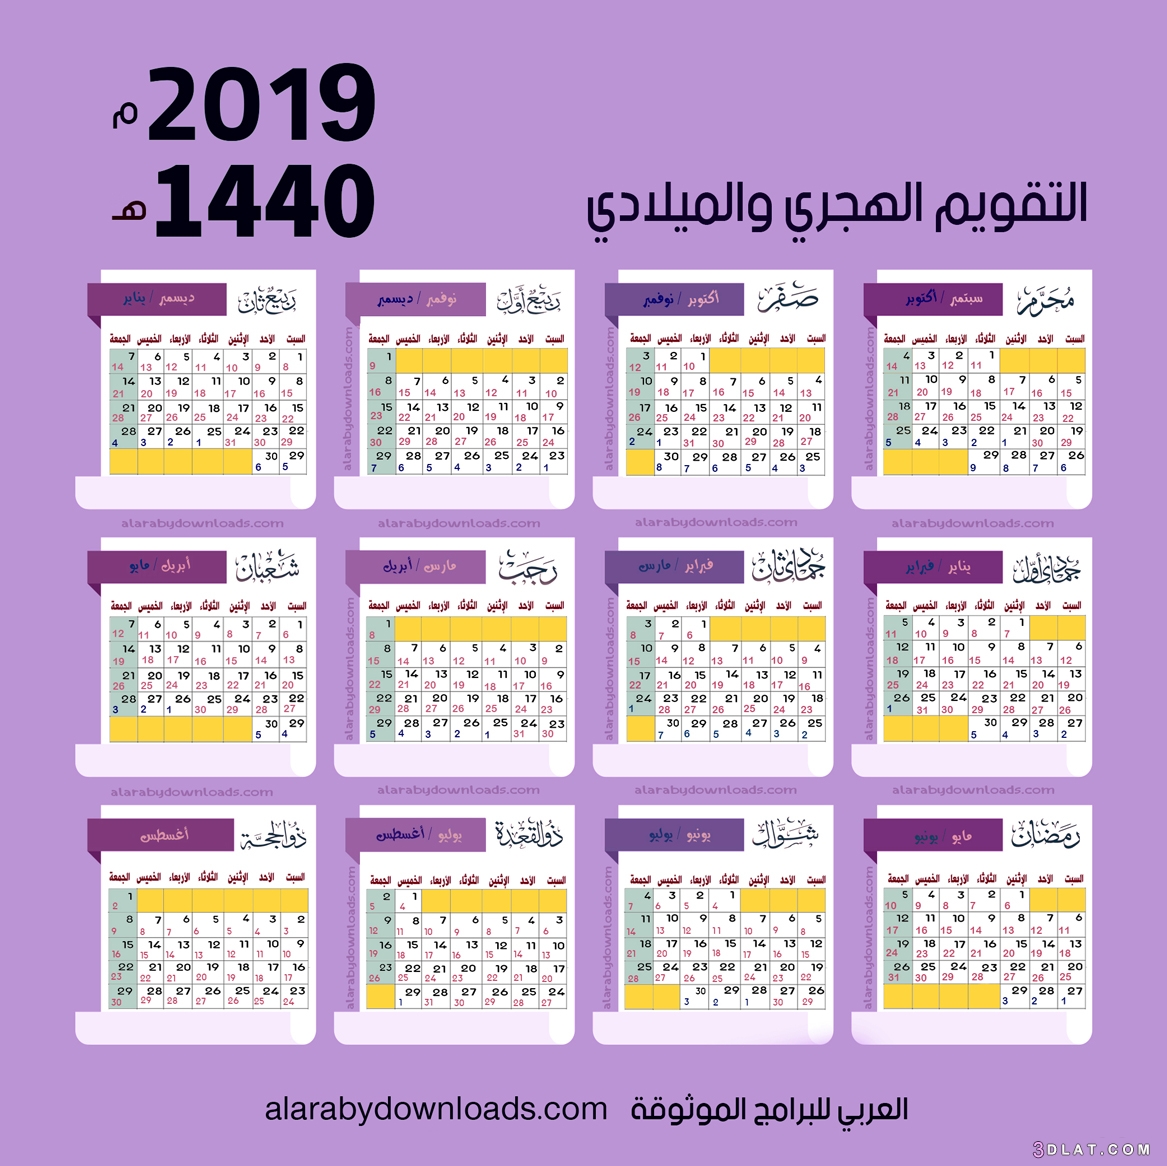 important dates in islamic calendar year 2022